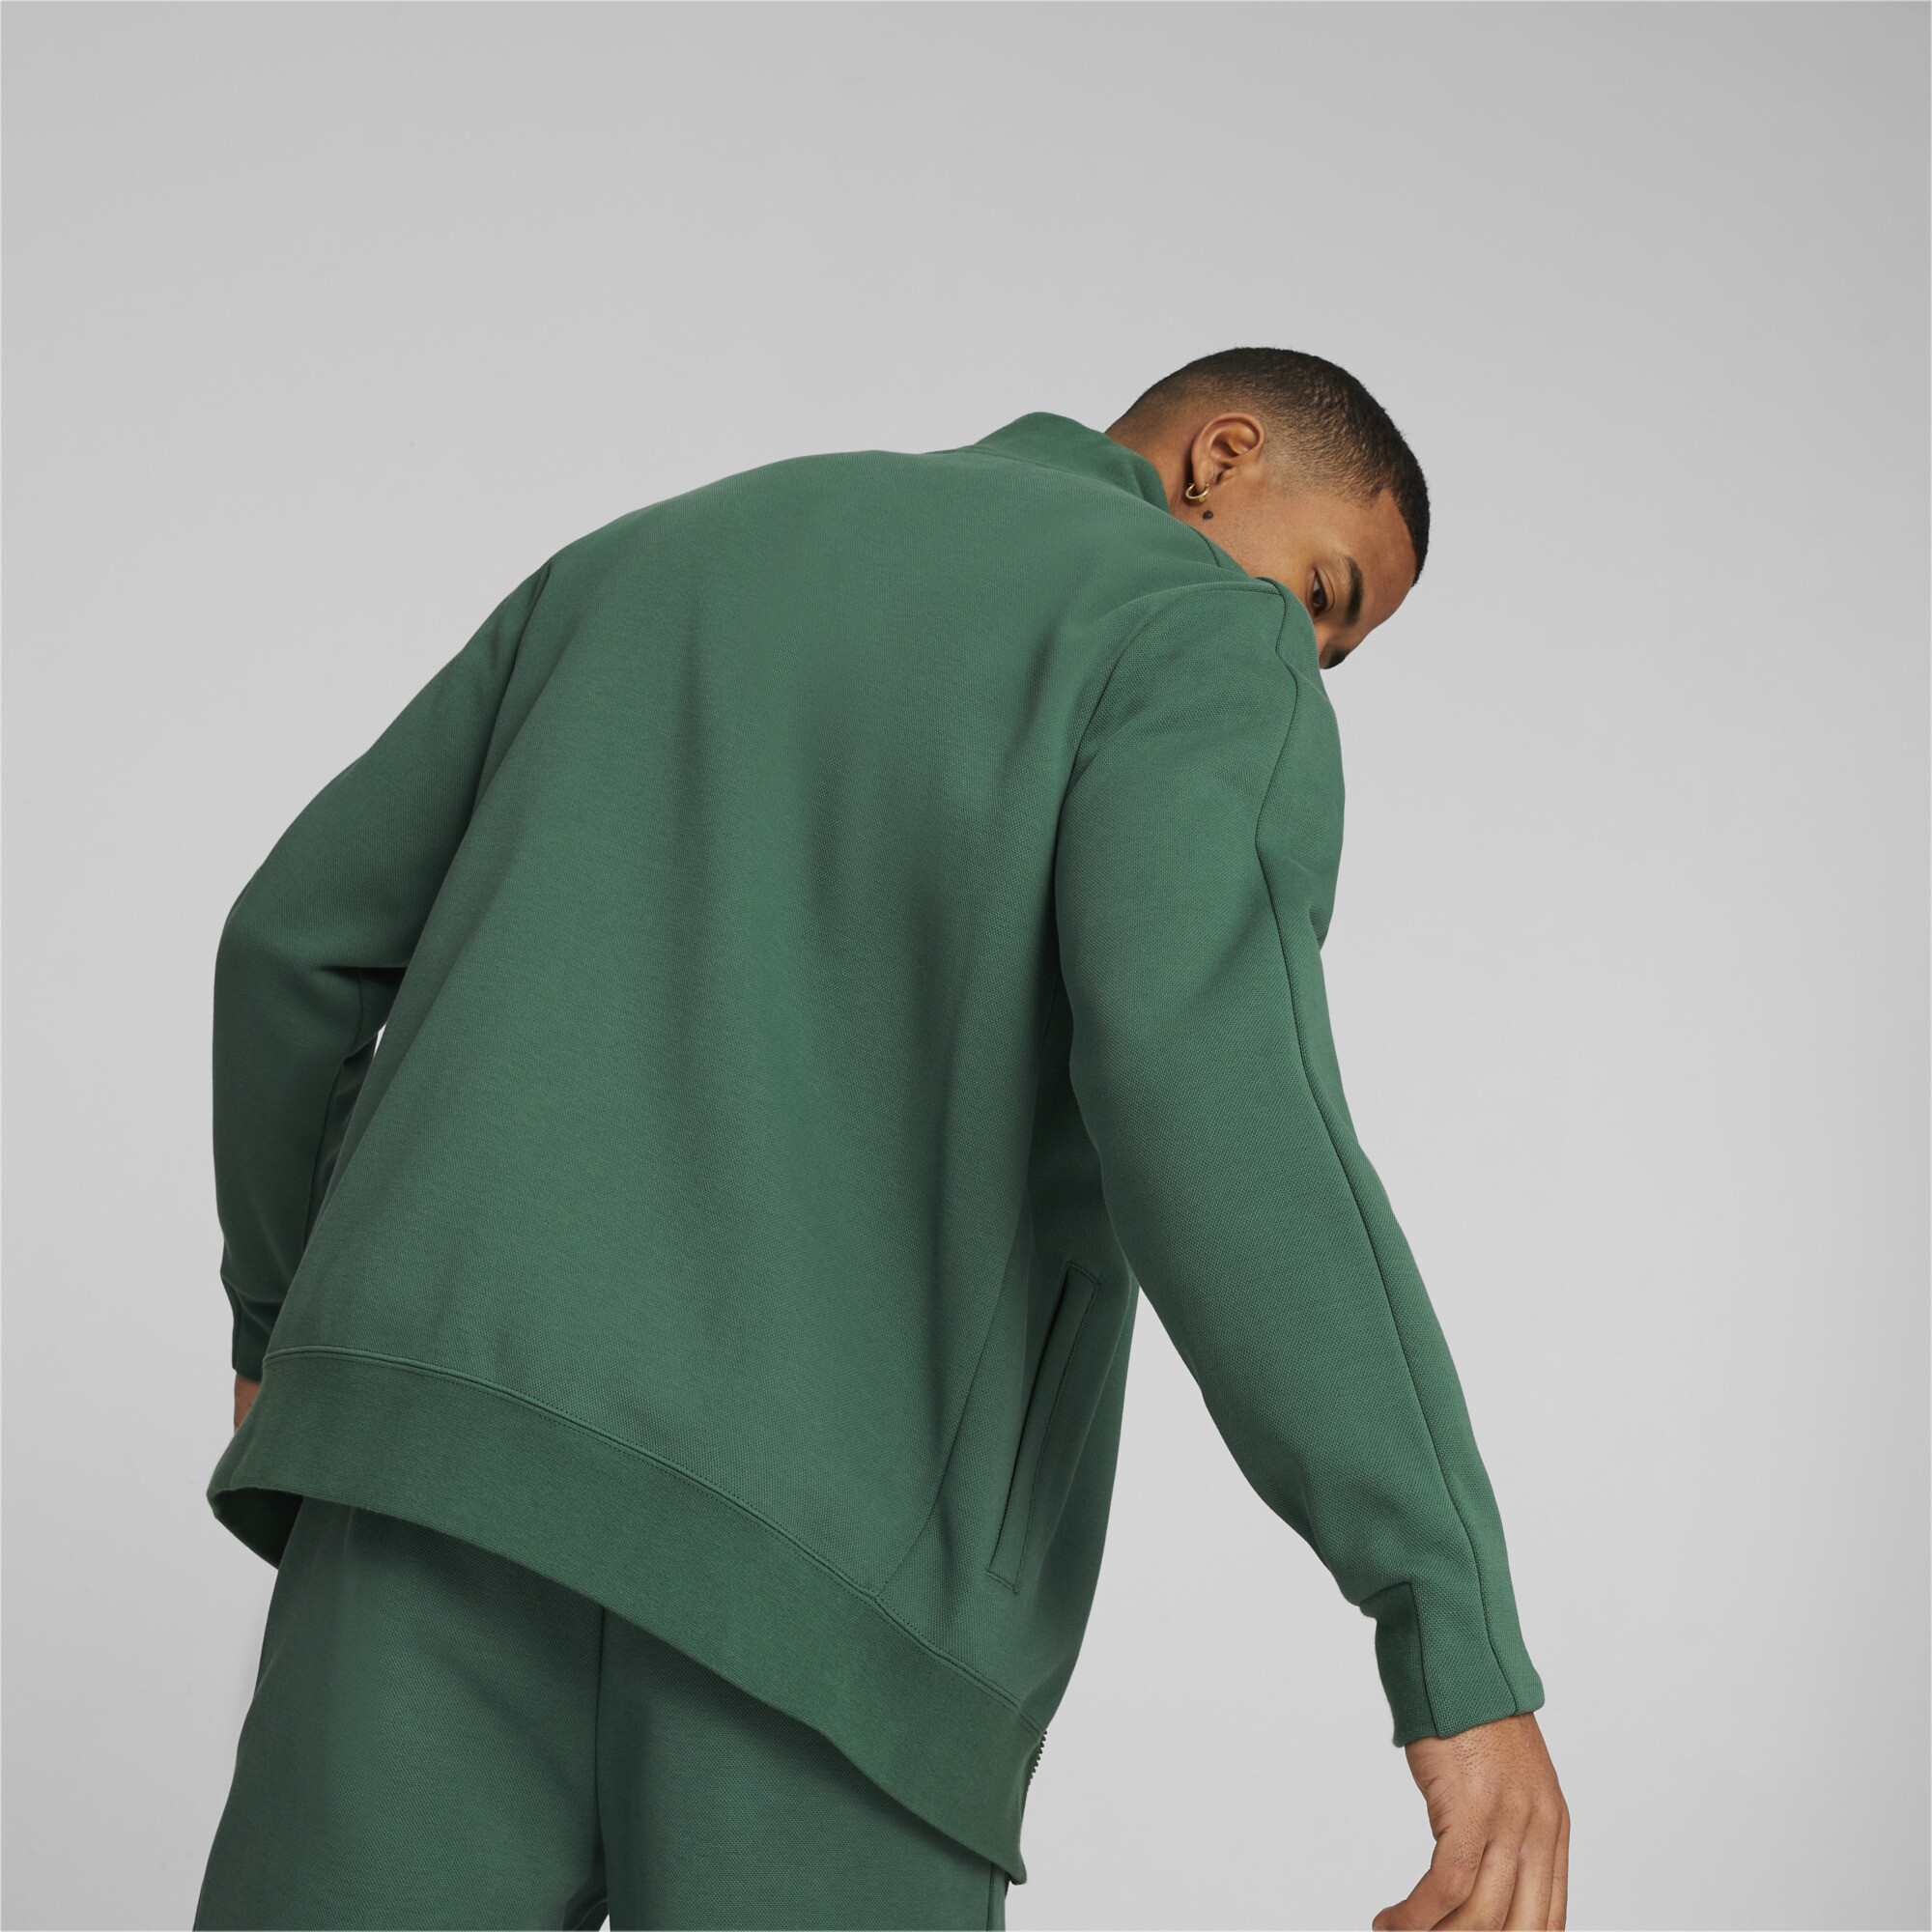 Men's PUMA T7 Track Jacket Men In 40 - Green, Size Small